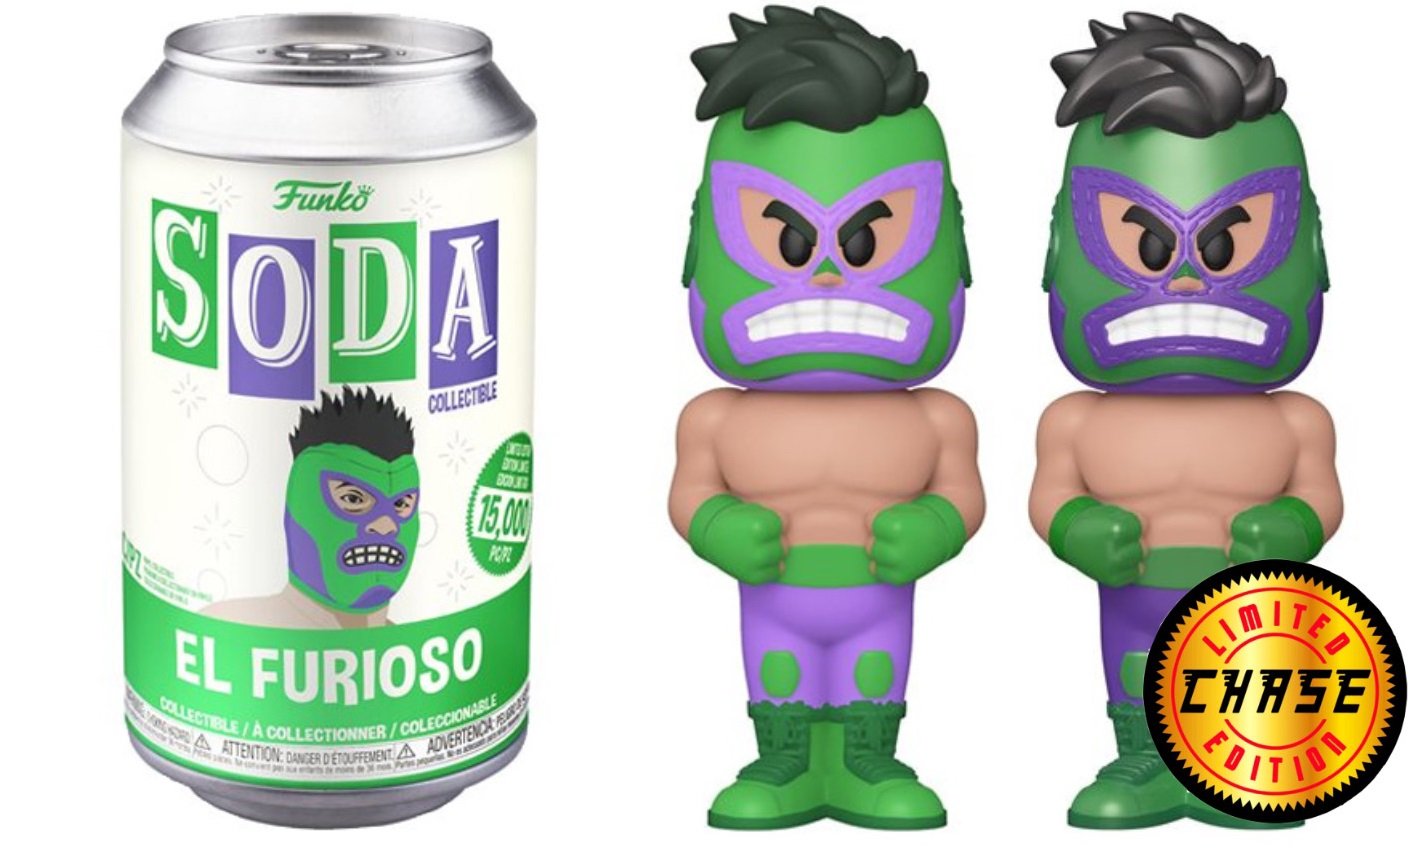 Funko Soda El Furioso Hulk